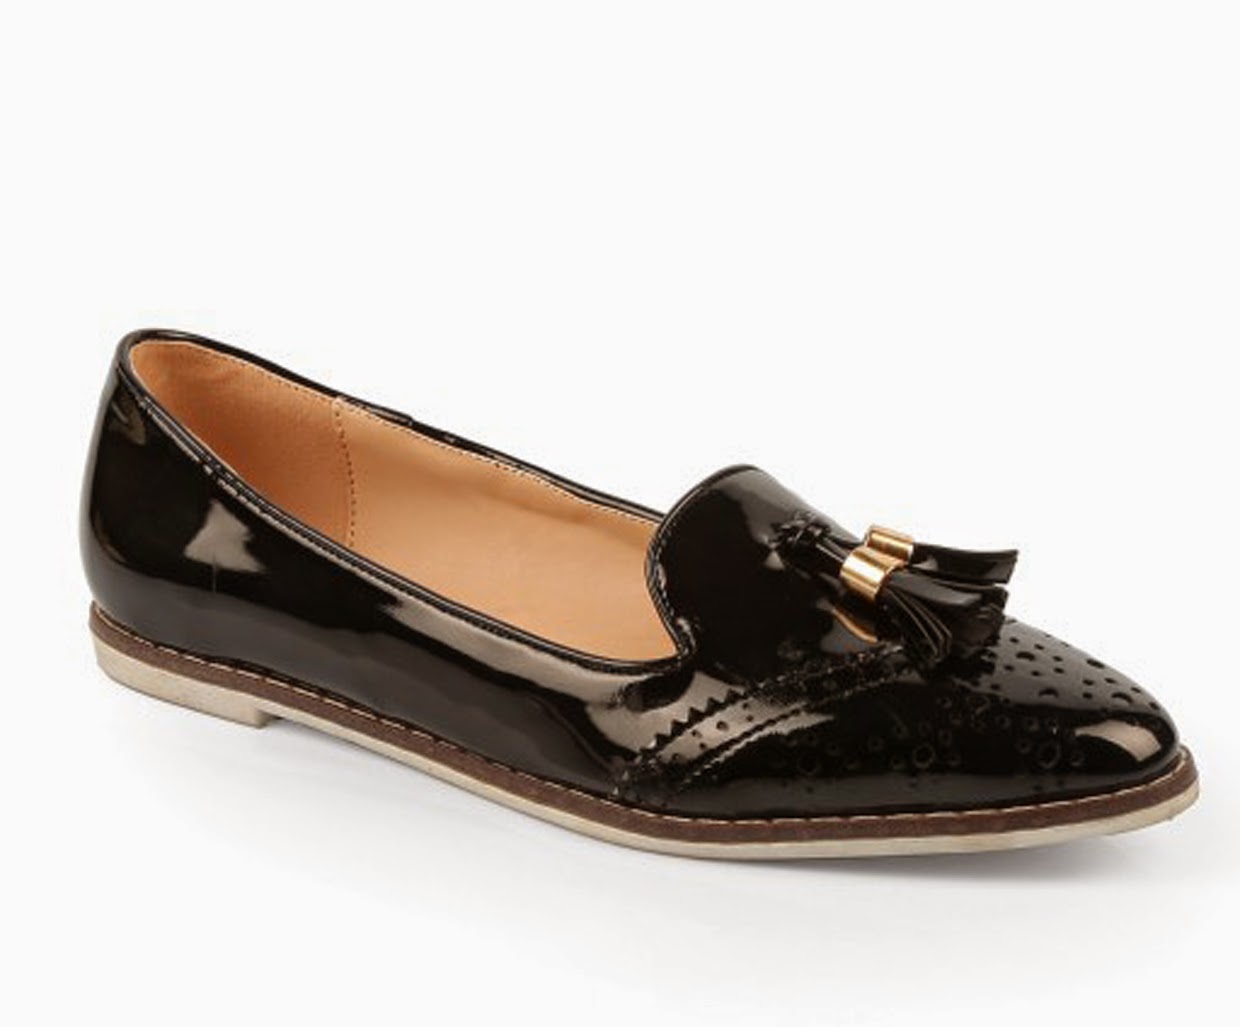 http://www.ebay.fr/itm/ballerines-femme-petit-talon-pompons-loafers-noir-slippers-glands-elegants-chic-/291395271274?ssPageName=STRK:MESE:IT